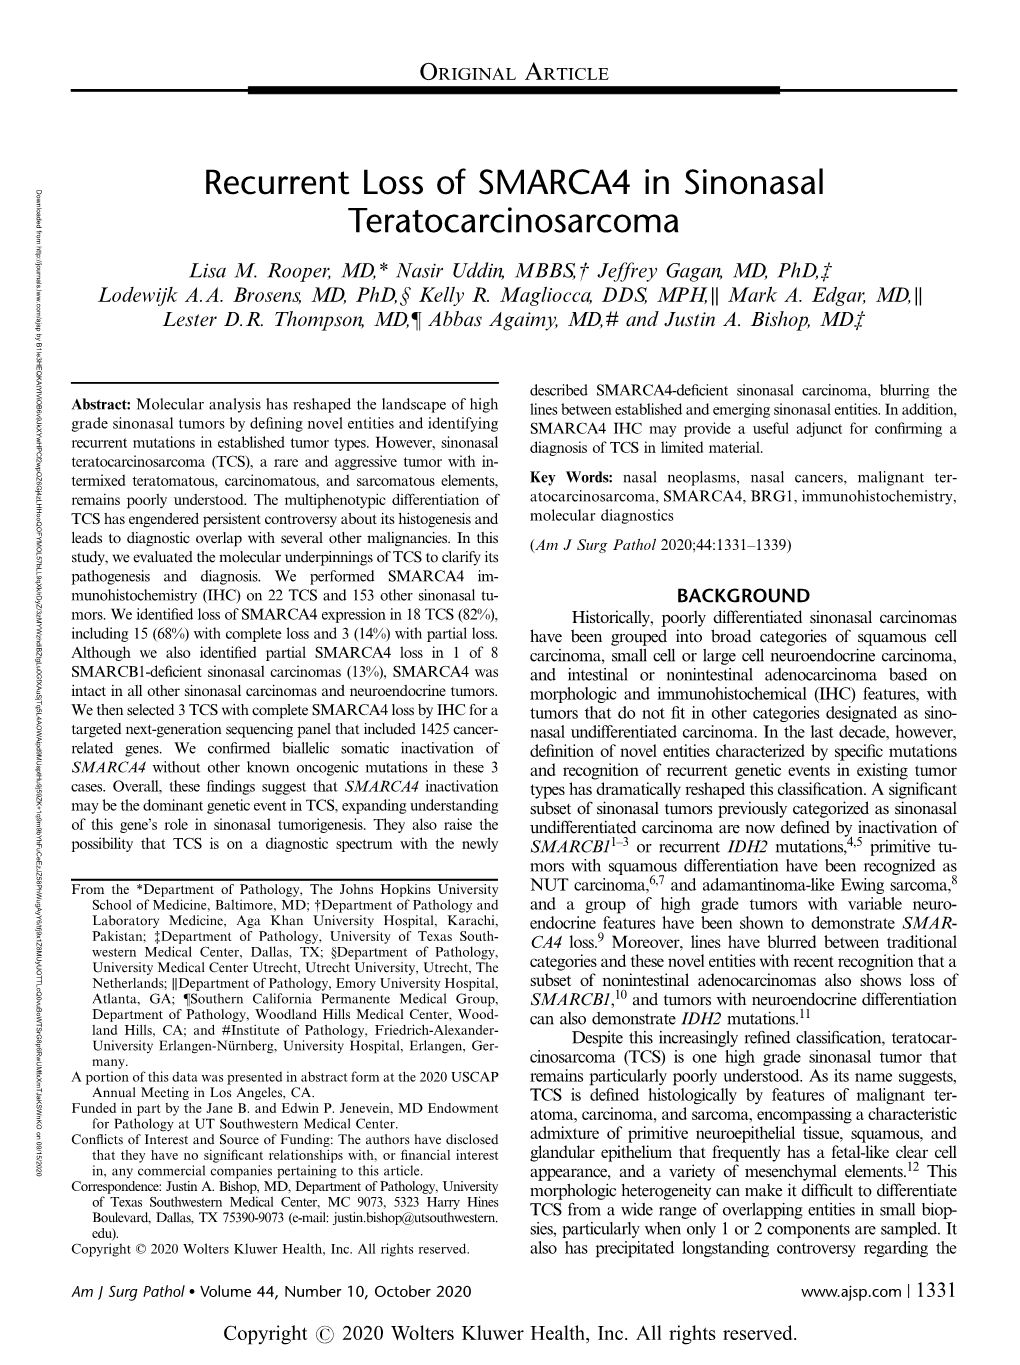 Recurrent Loss of SMARCA4 in Sinonasal Teratocarcinosarcoma